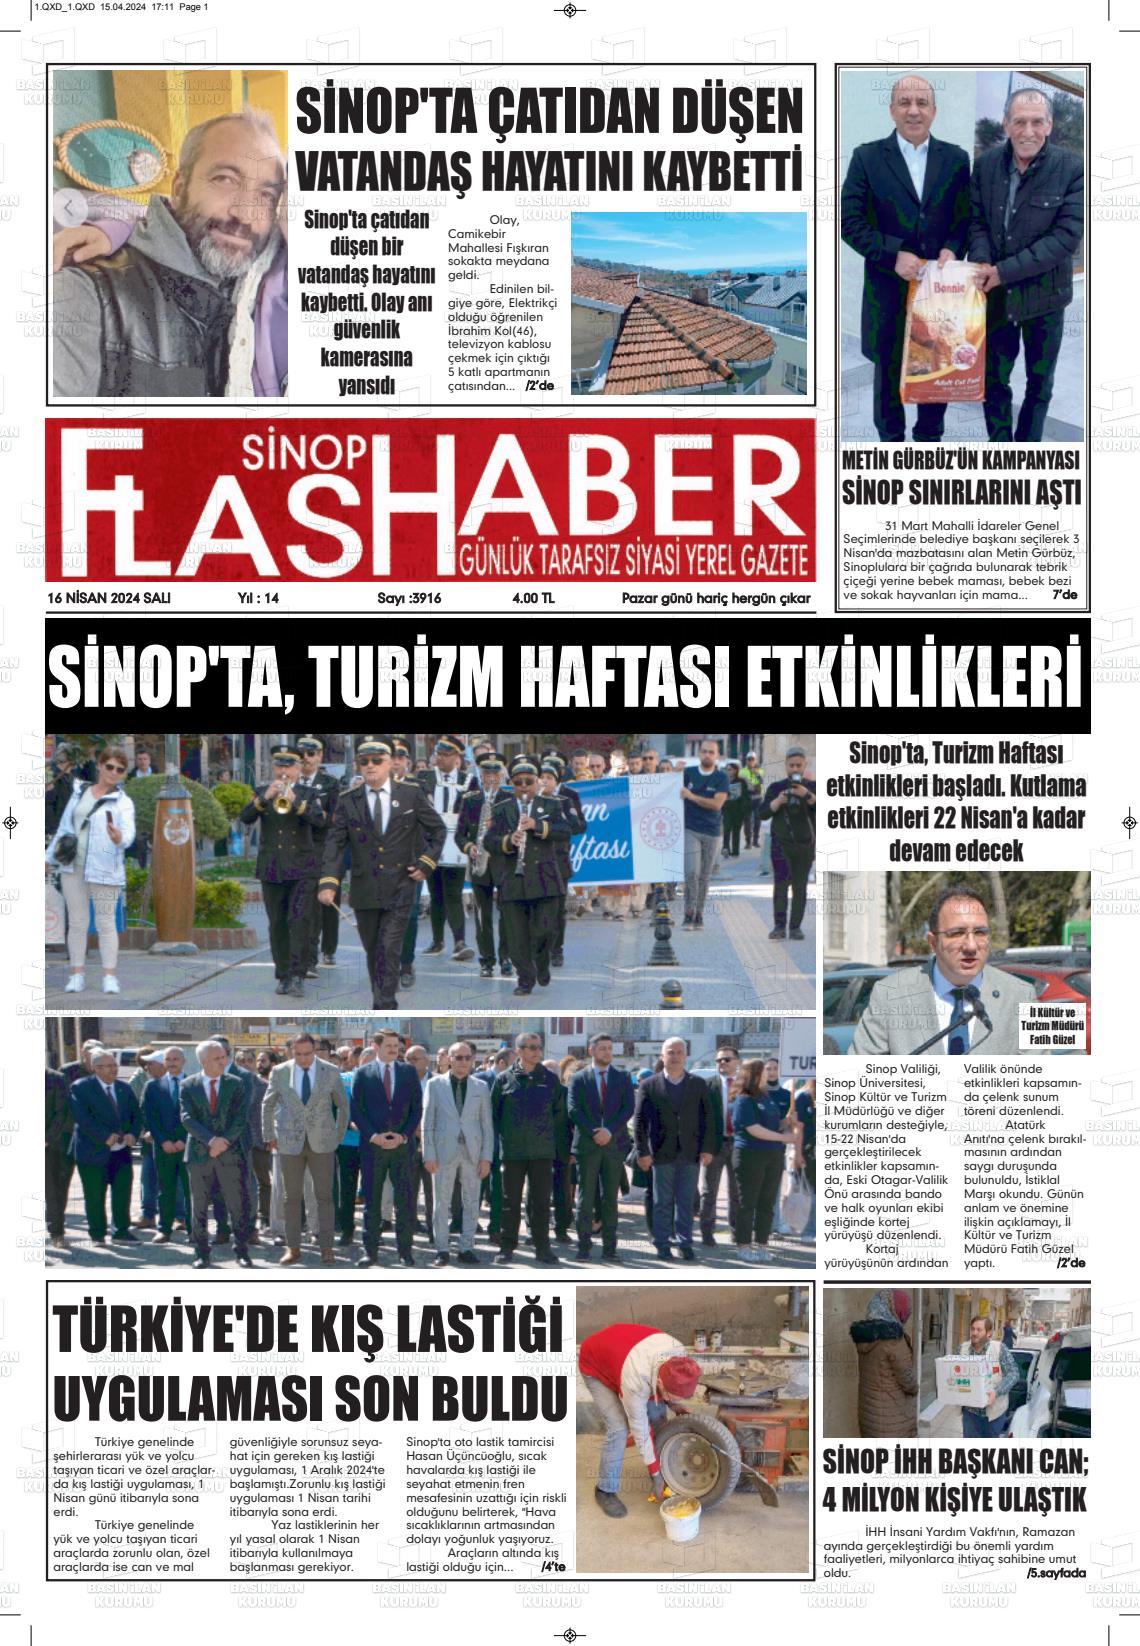 18 Nisan 2024 Sinop Flaş Haber Gazete Manşeti